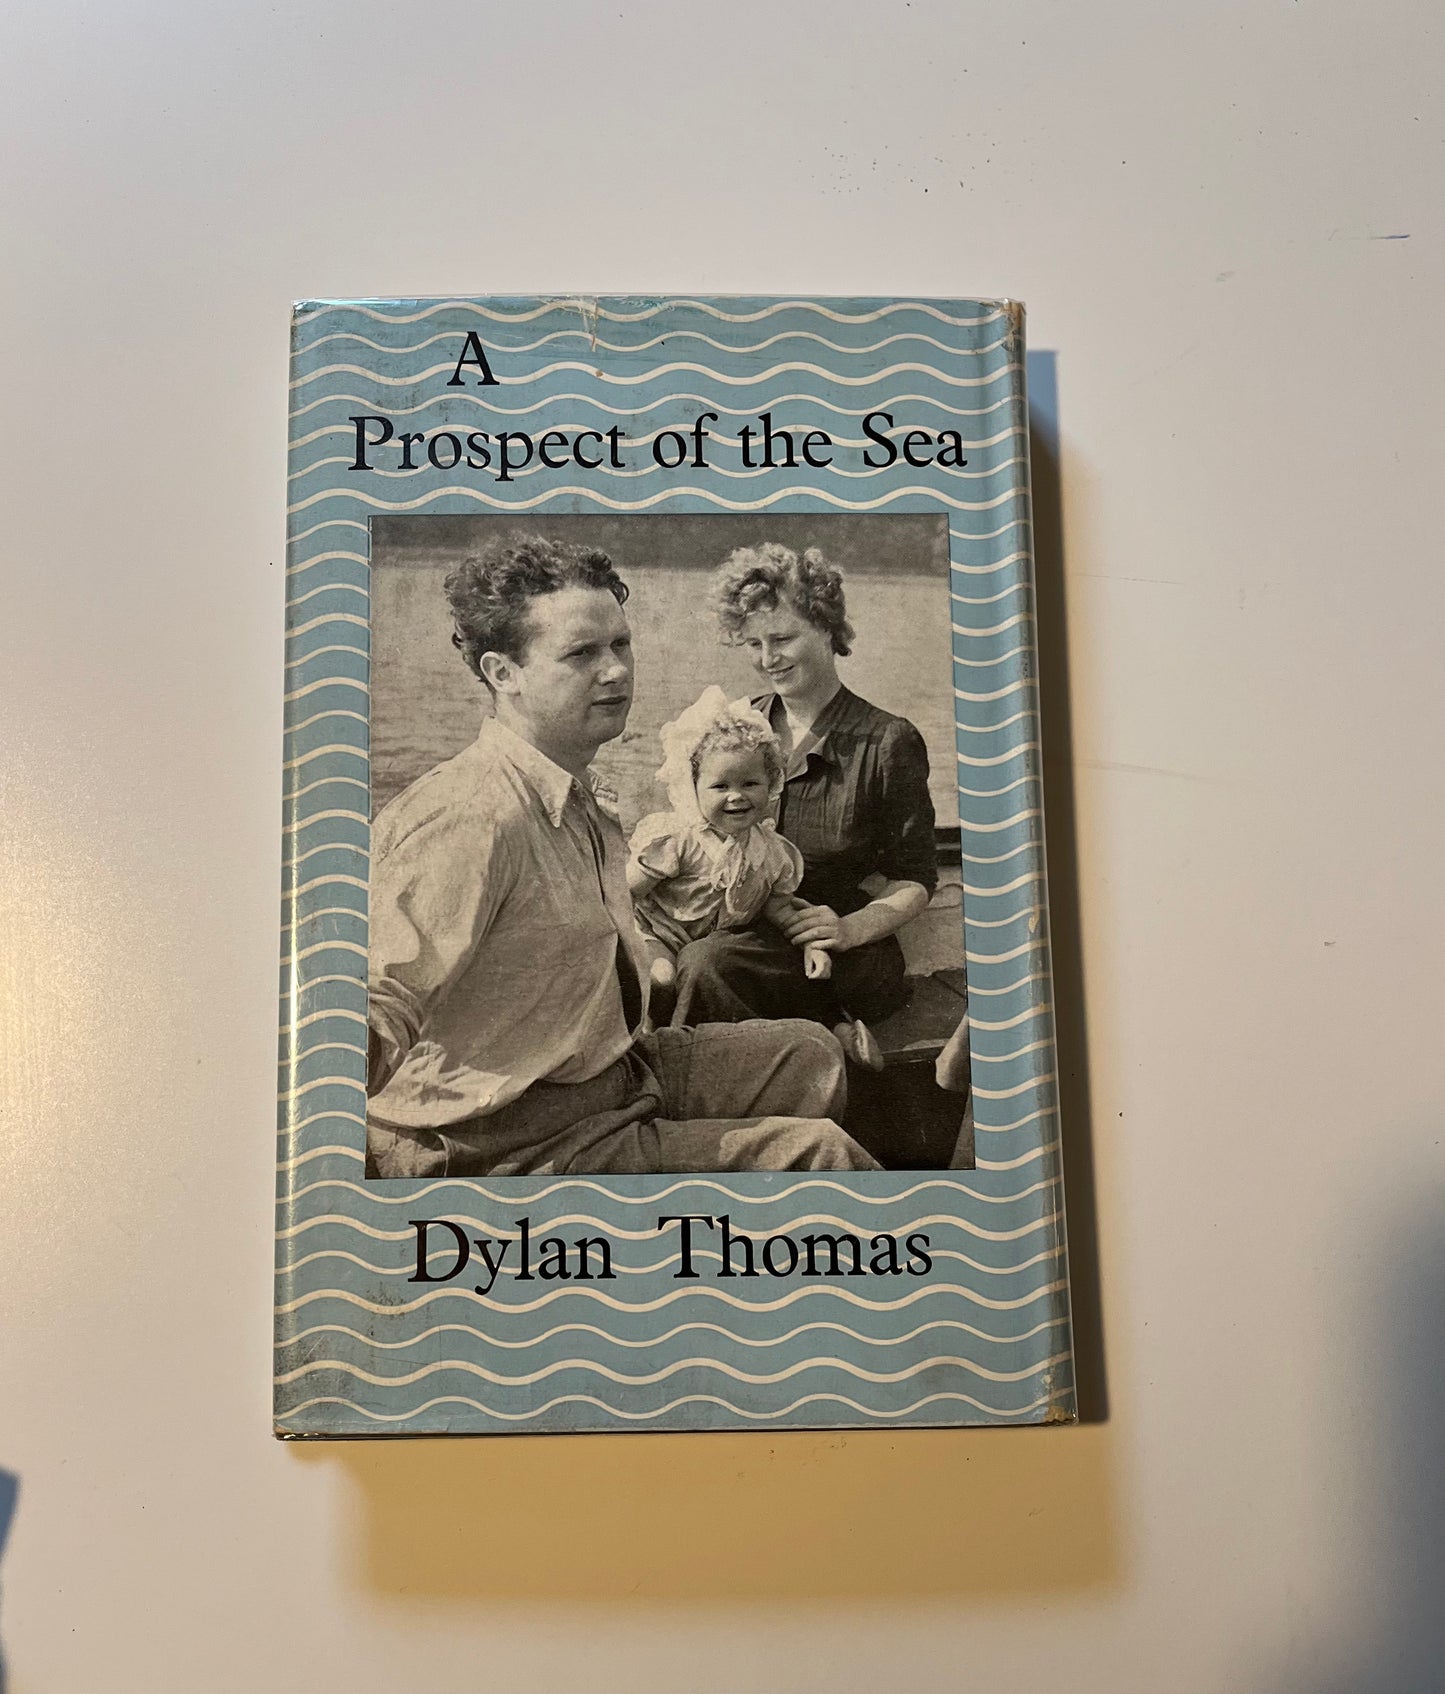 A Prospect of the Sea